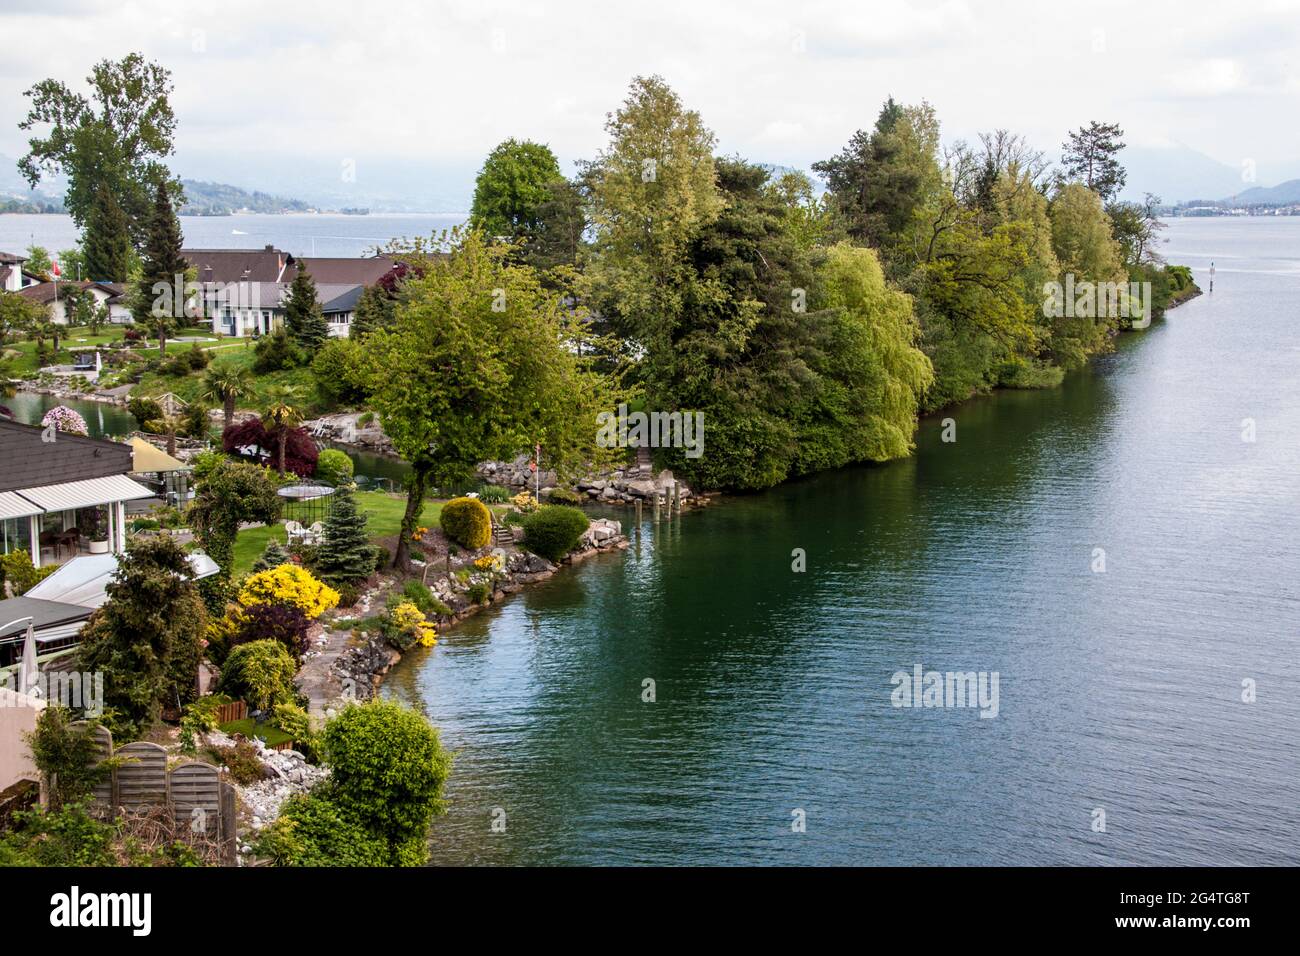 Village on the coast of Zurich lake, Switzerland Stock Photo